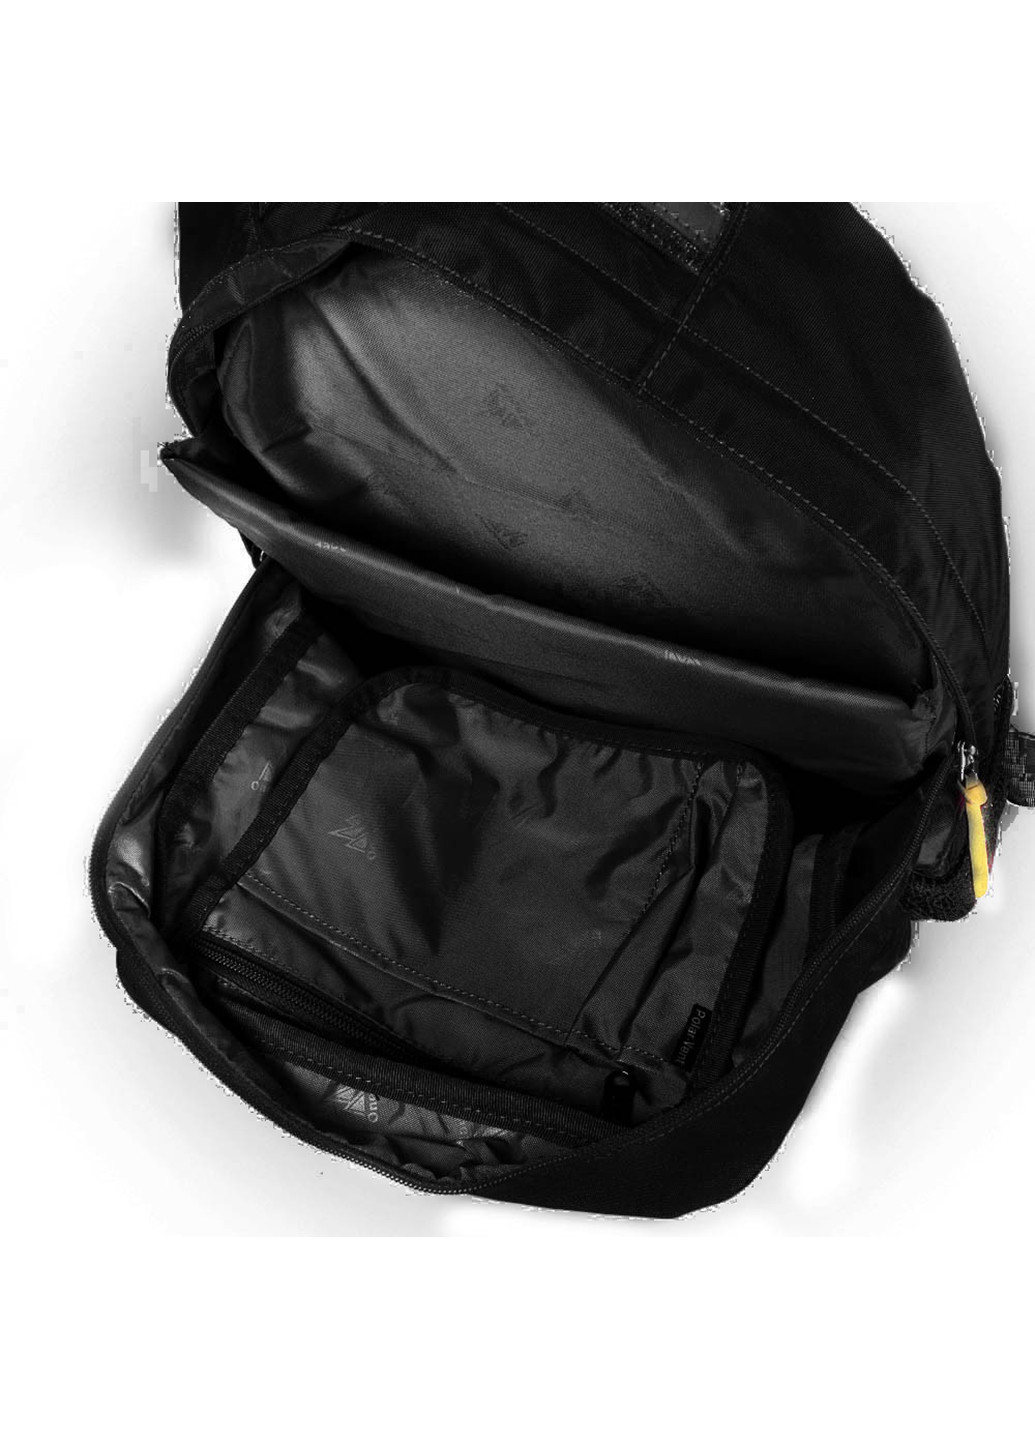 Мужской спортивный рюкзак 30х44х10 см Onepolar (252129068)